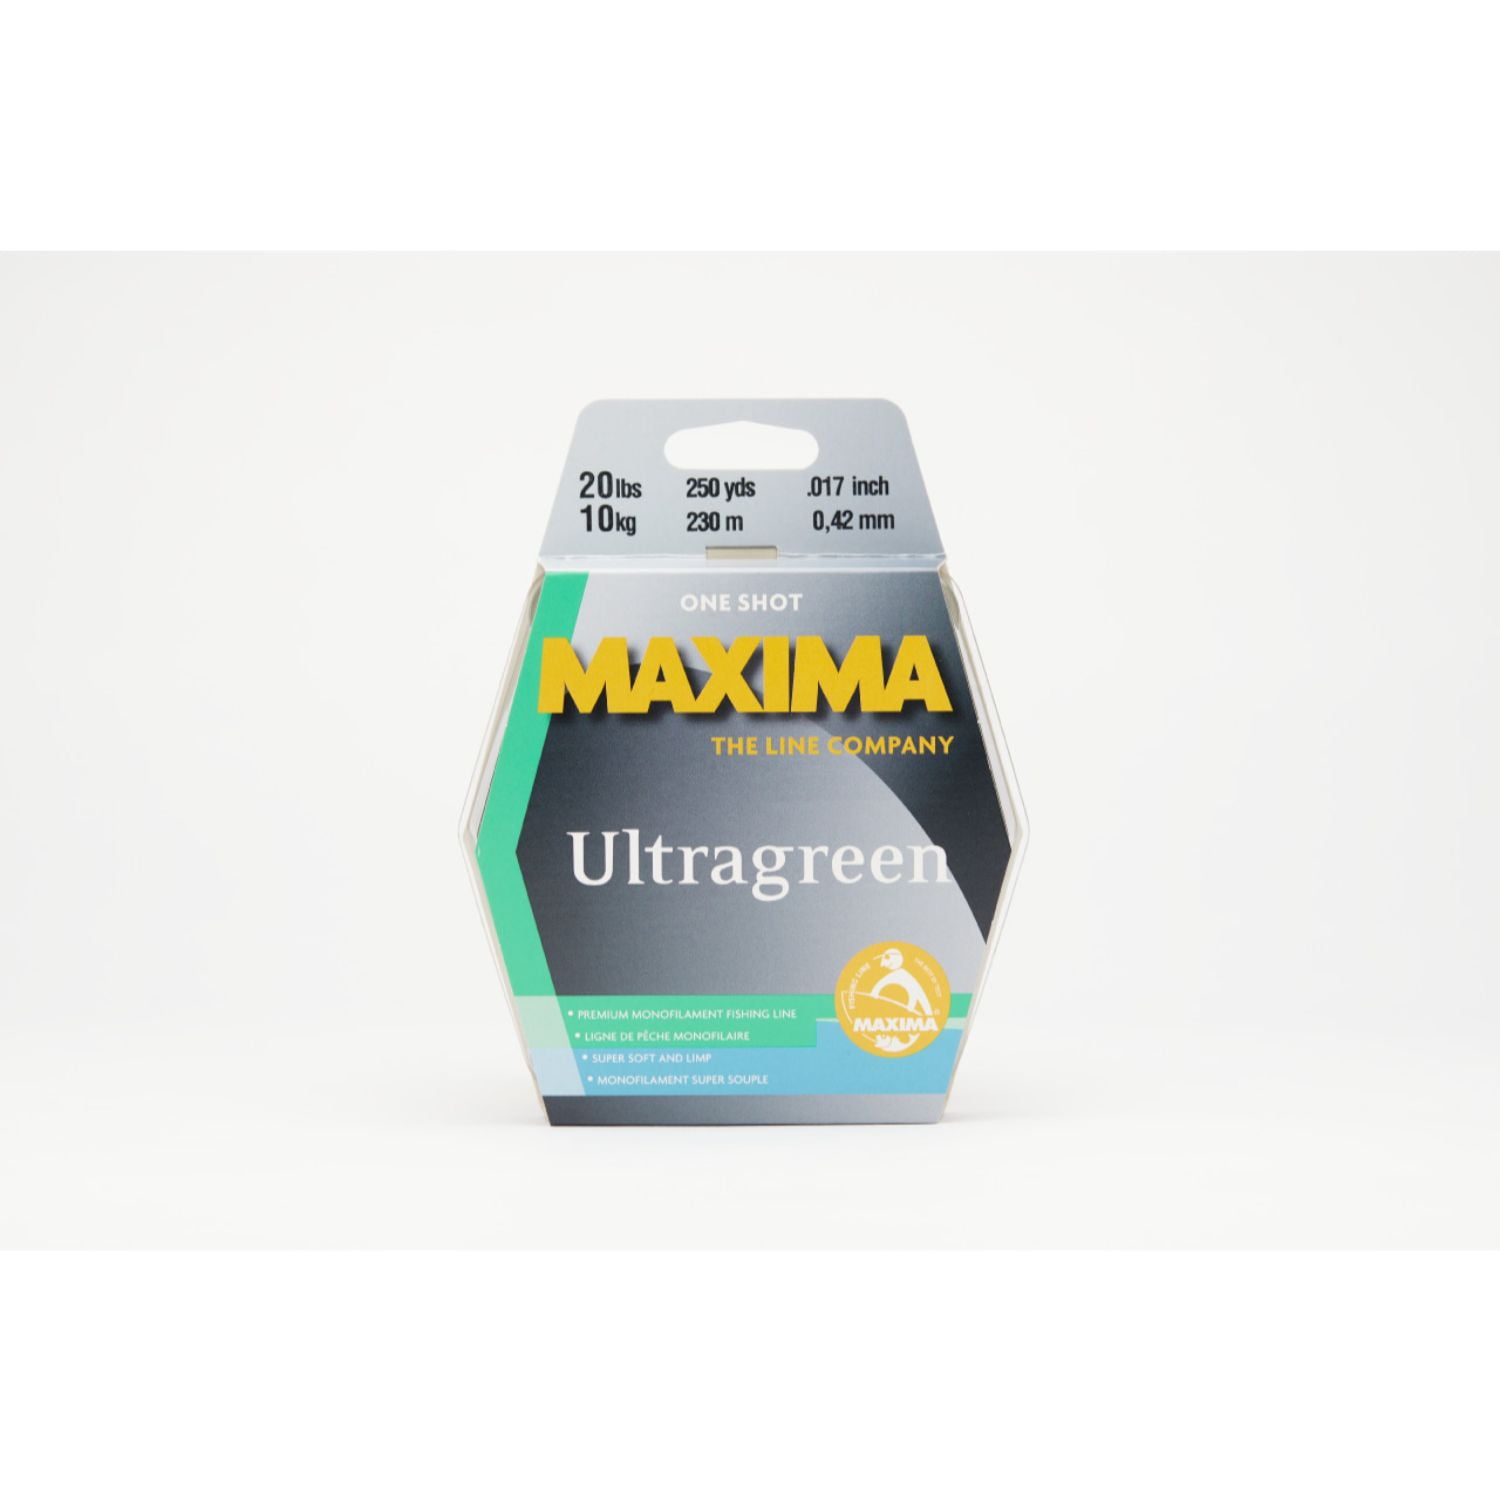 Maxima Ultragreen One Shot Spool - 250yds 30lb